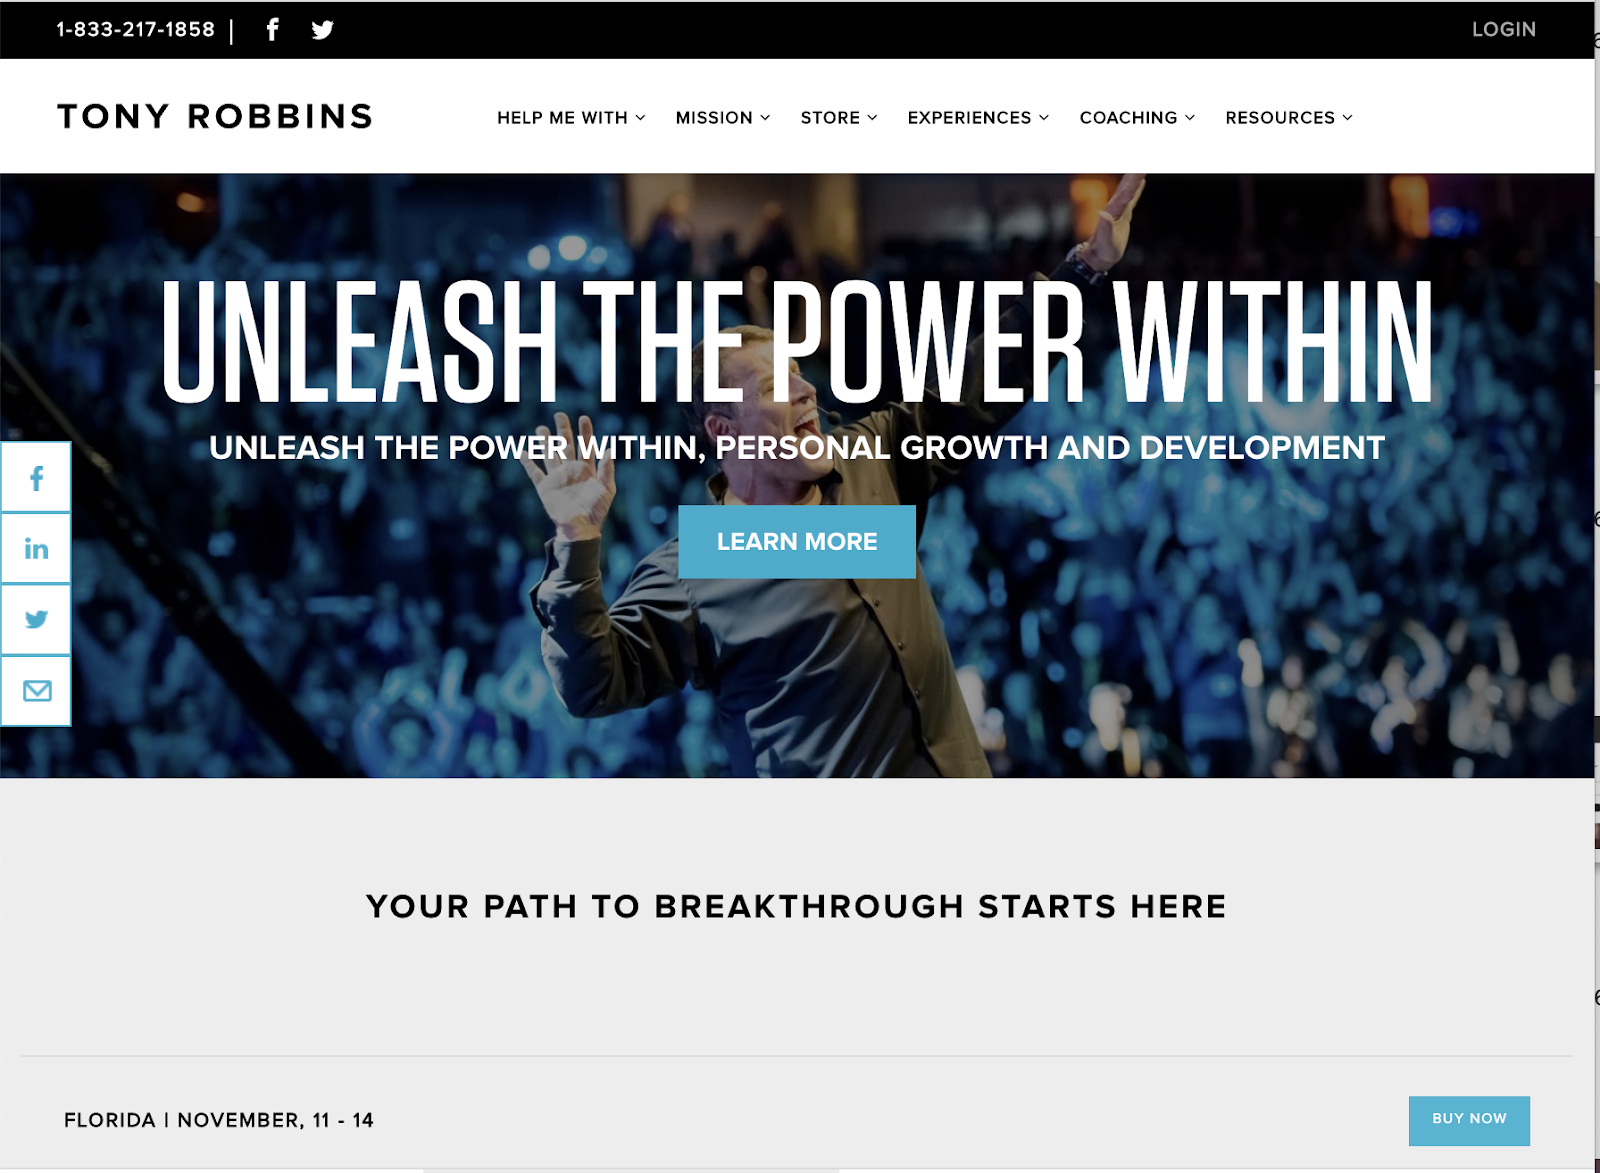 Tony Robbins landing page example